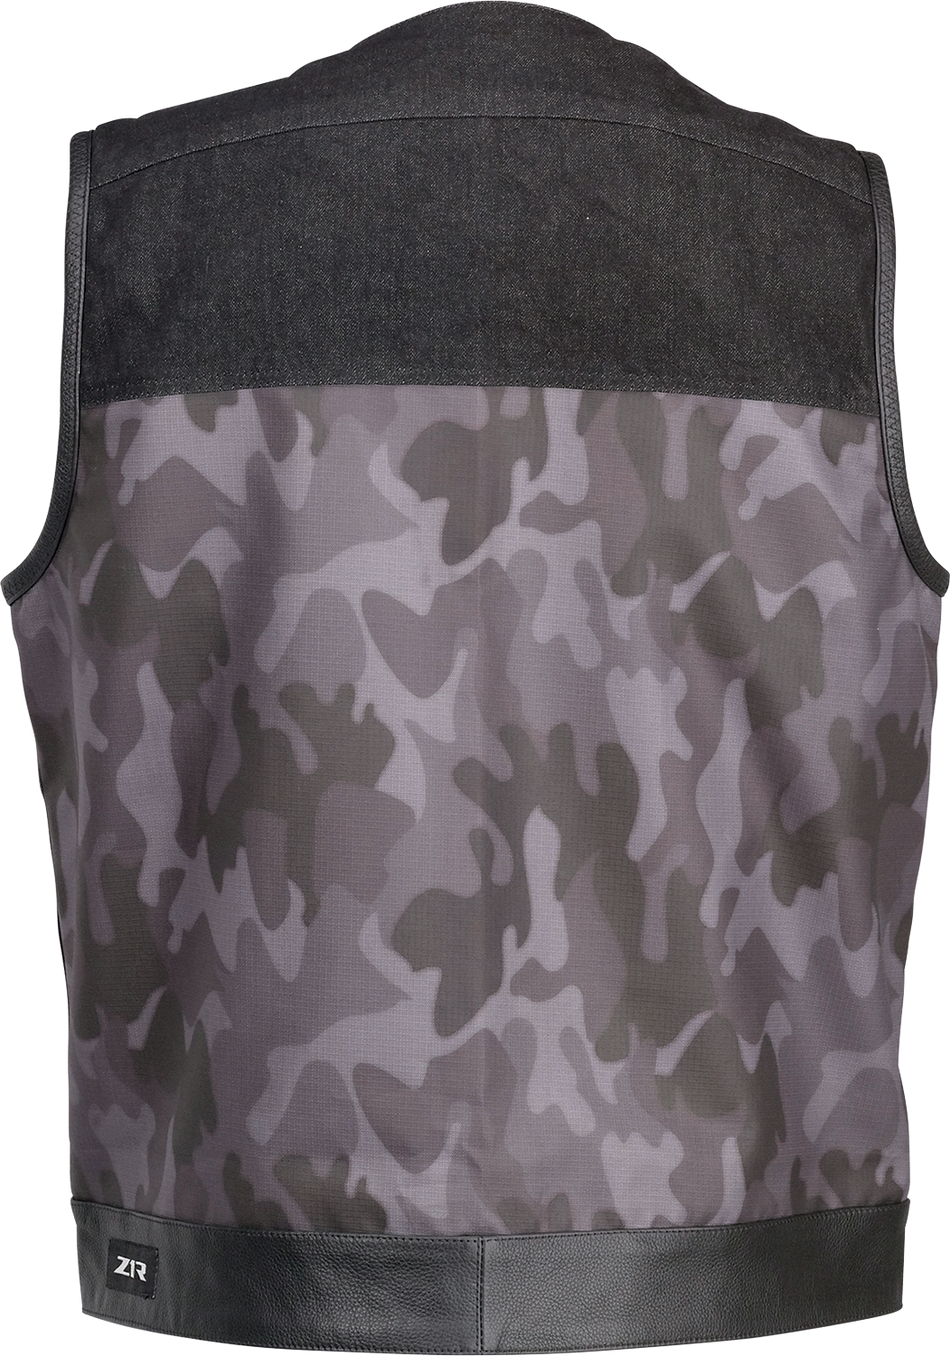 Z1R Nightfire Camo Vest - Black/Gray - Medium 2830-0625